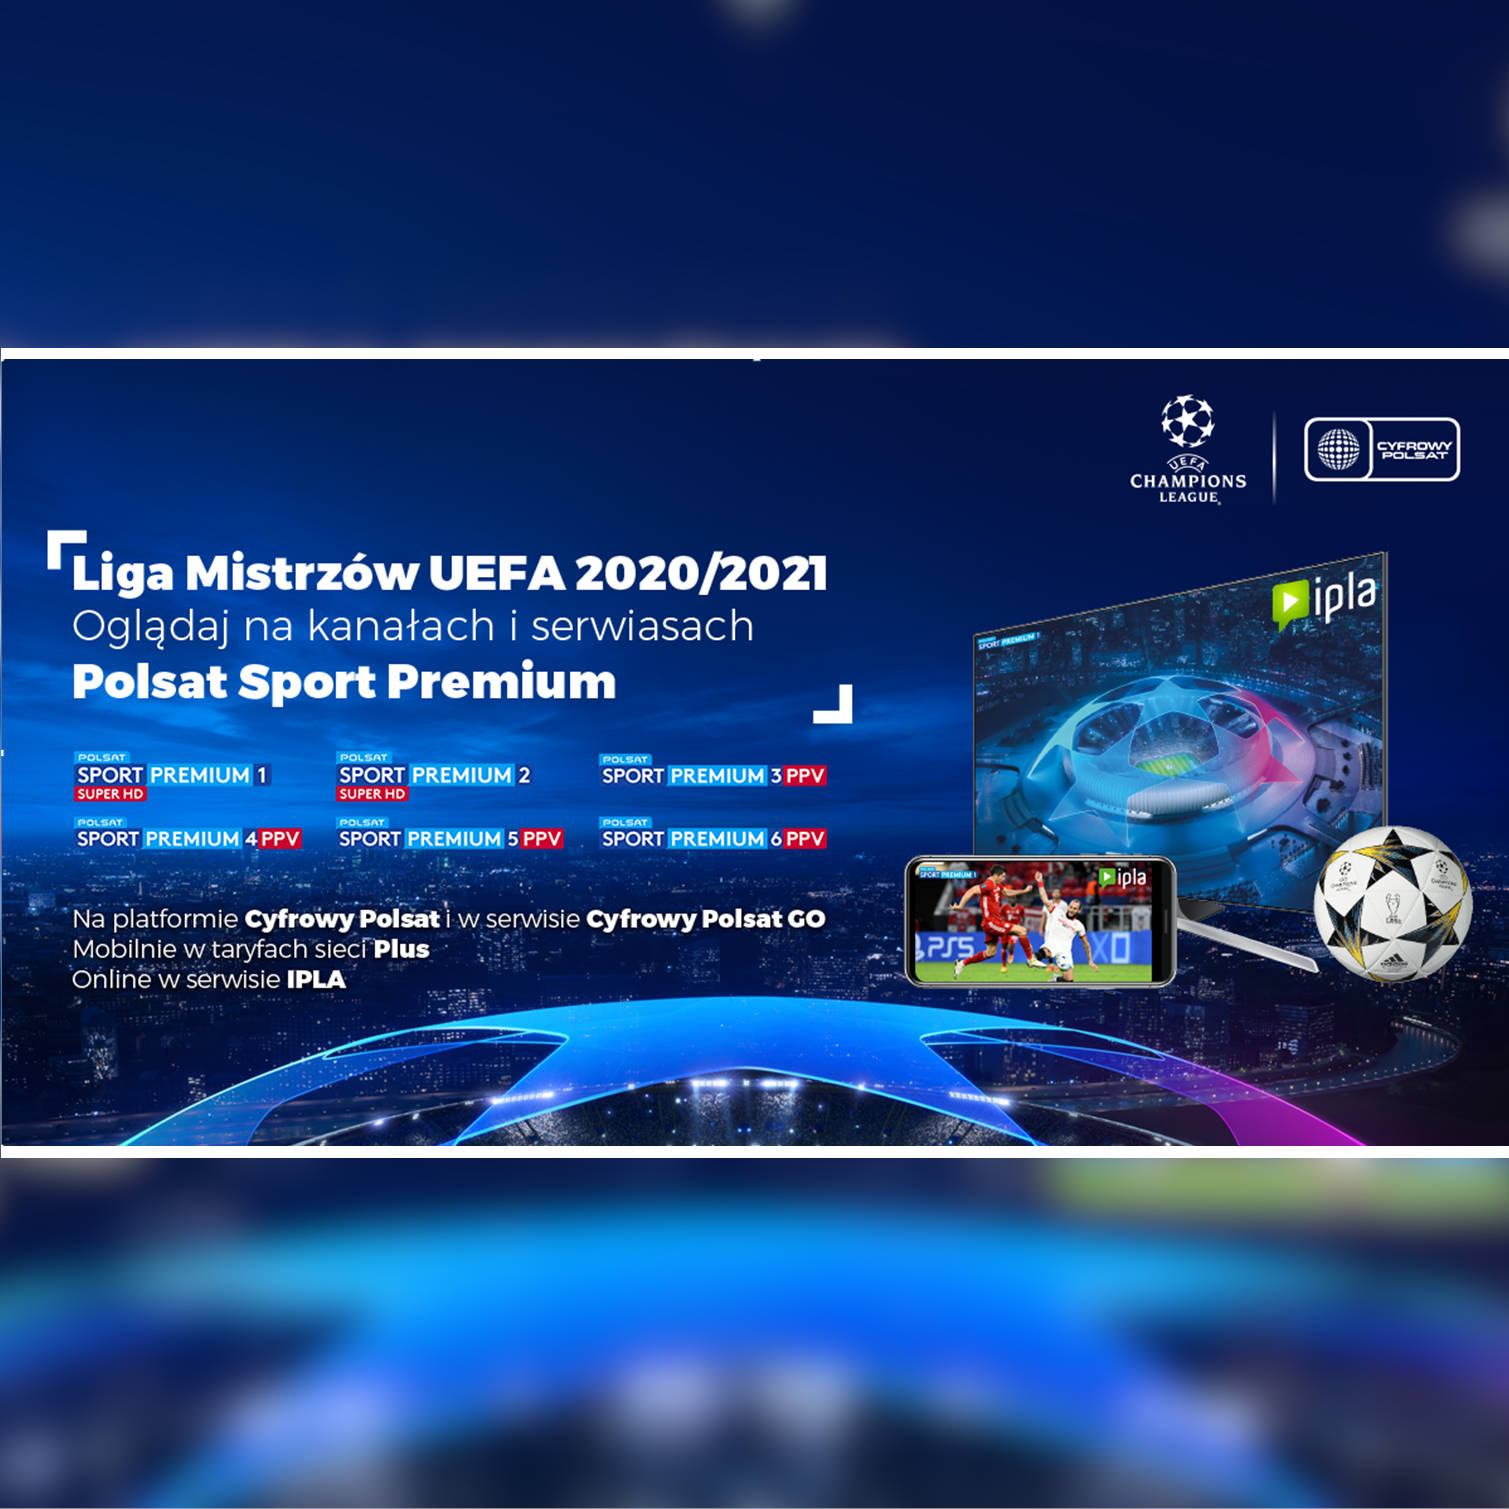 Polsat Sport Premium oraz Ipla pokażą